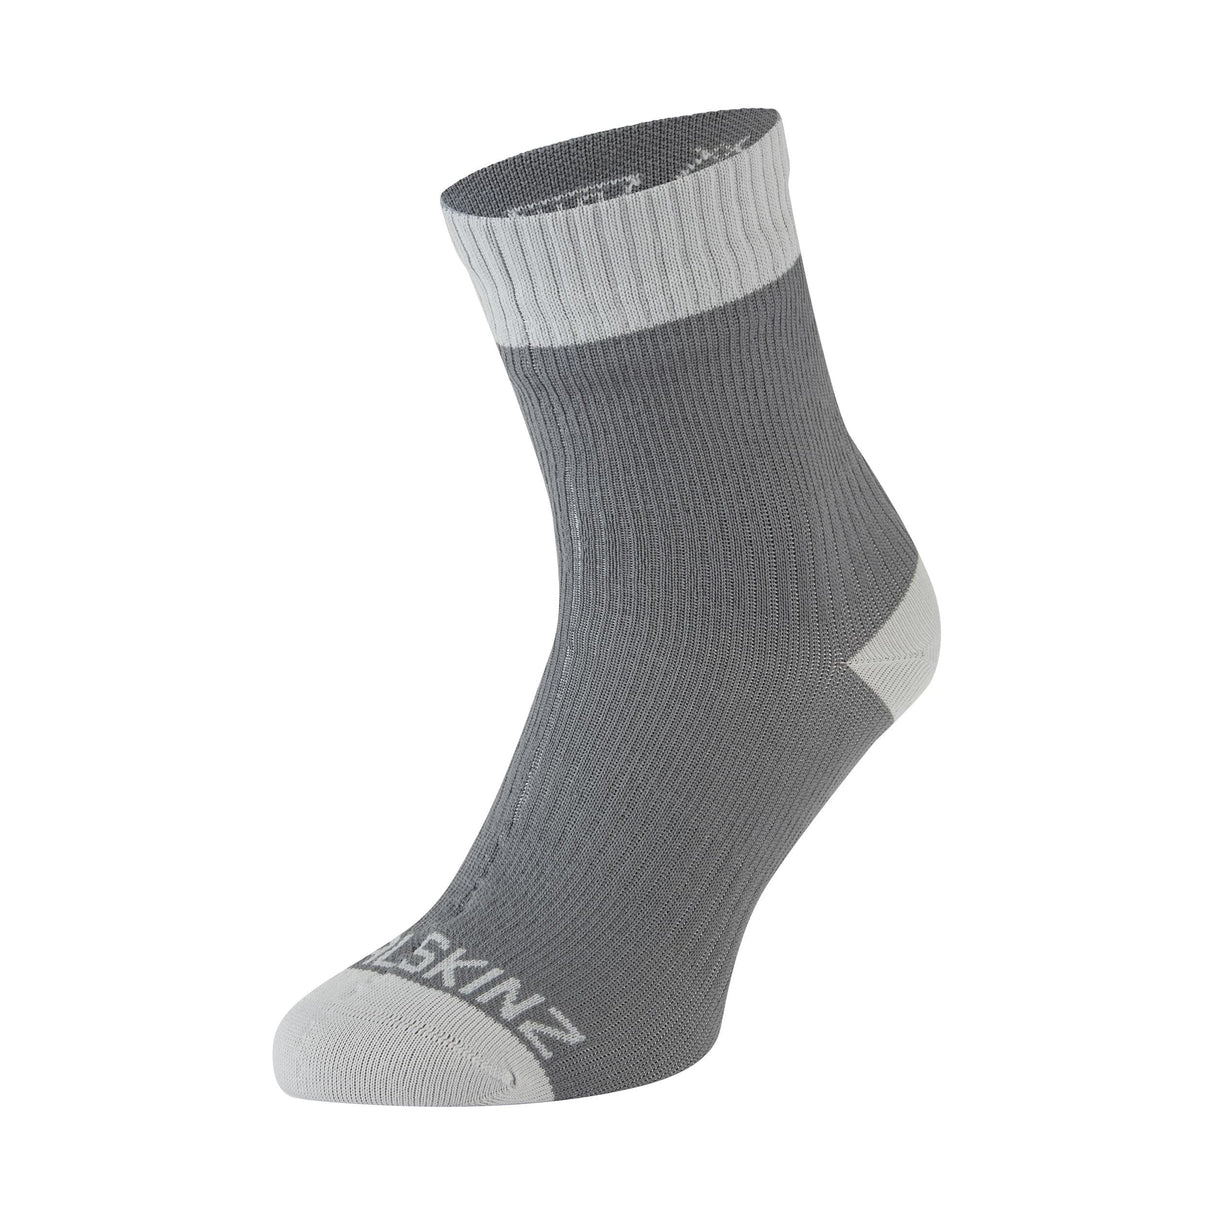 Sealskinz Wretham Waterproof Warm Weather Ankle Socks  -  X-Large / Gray 2